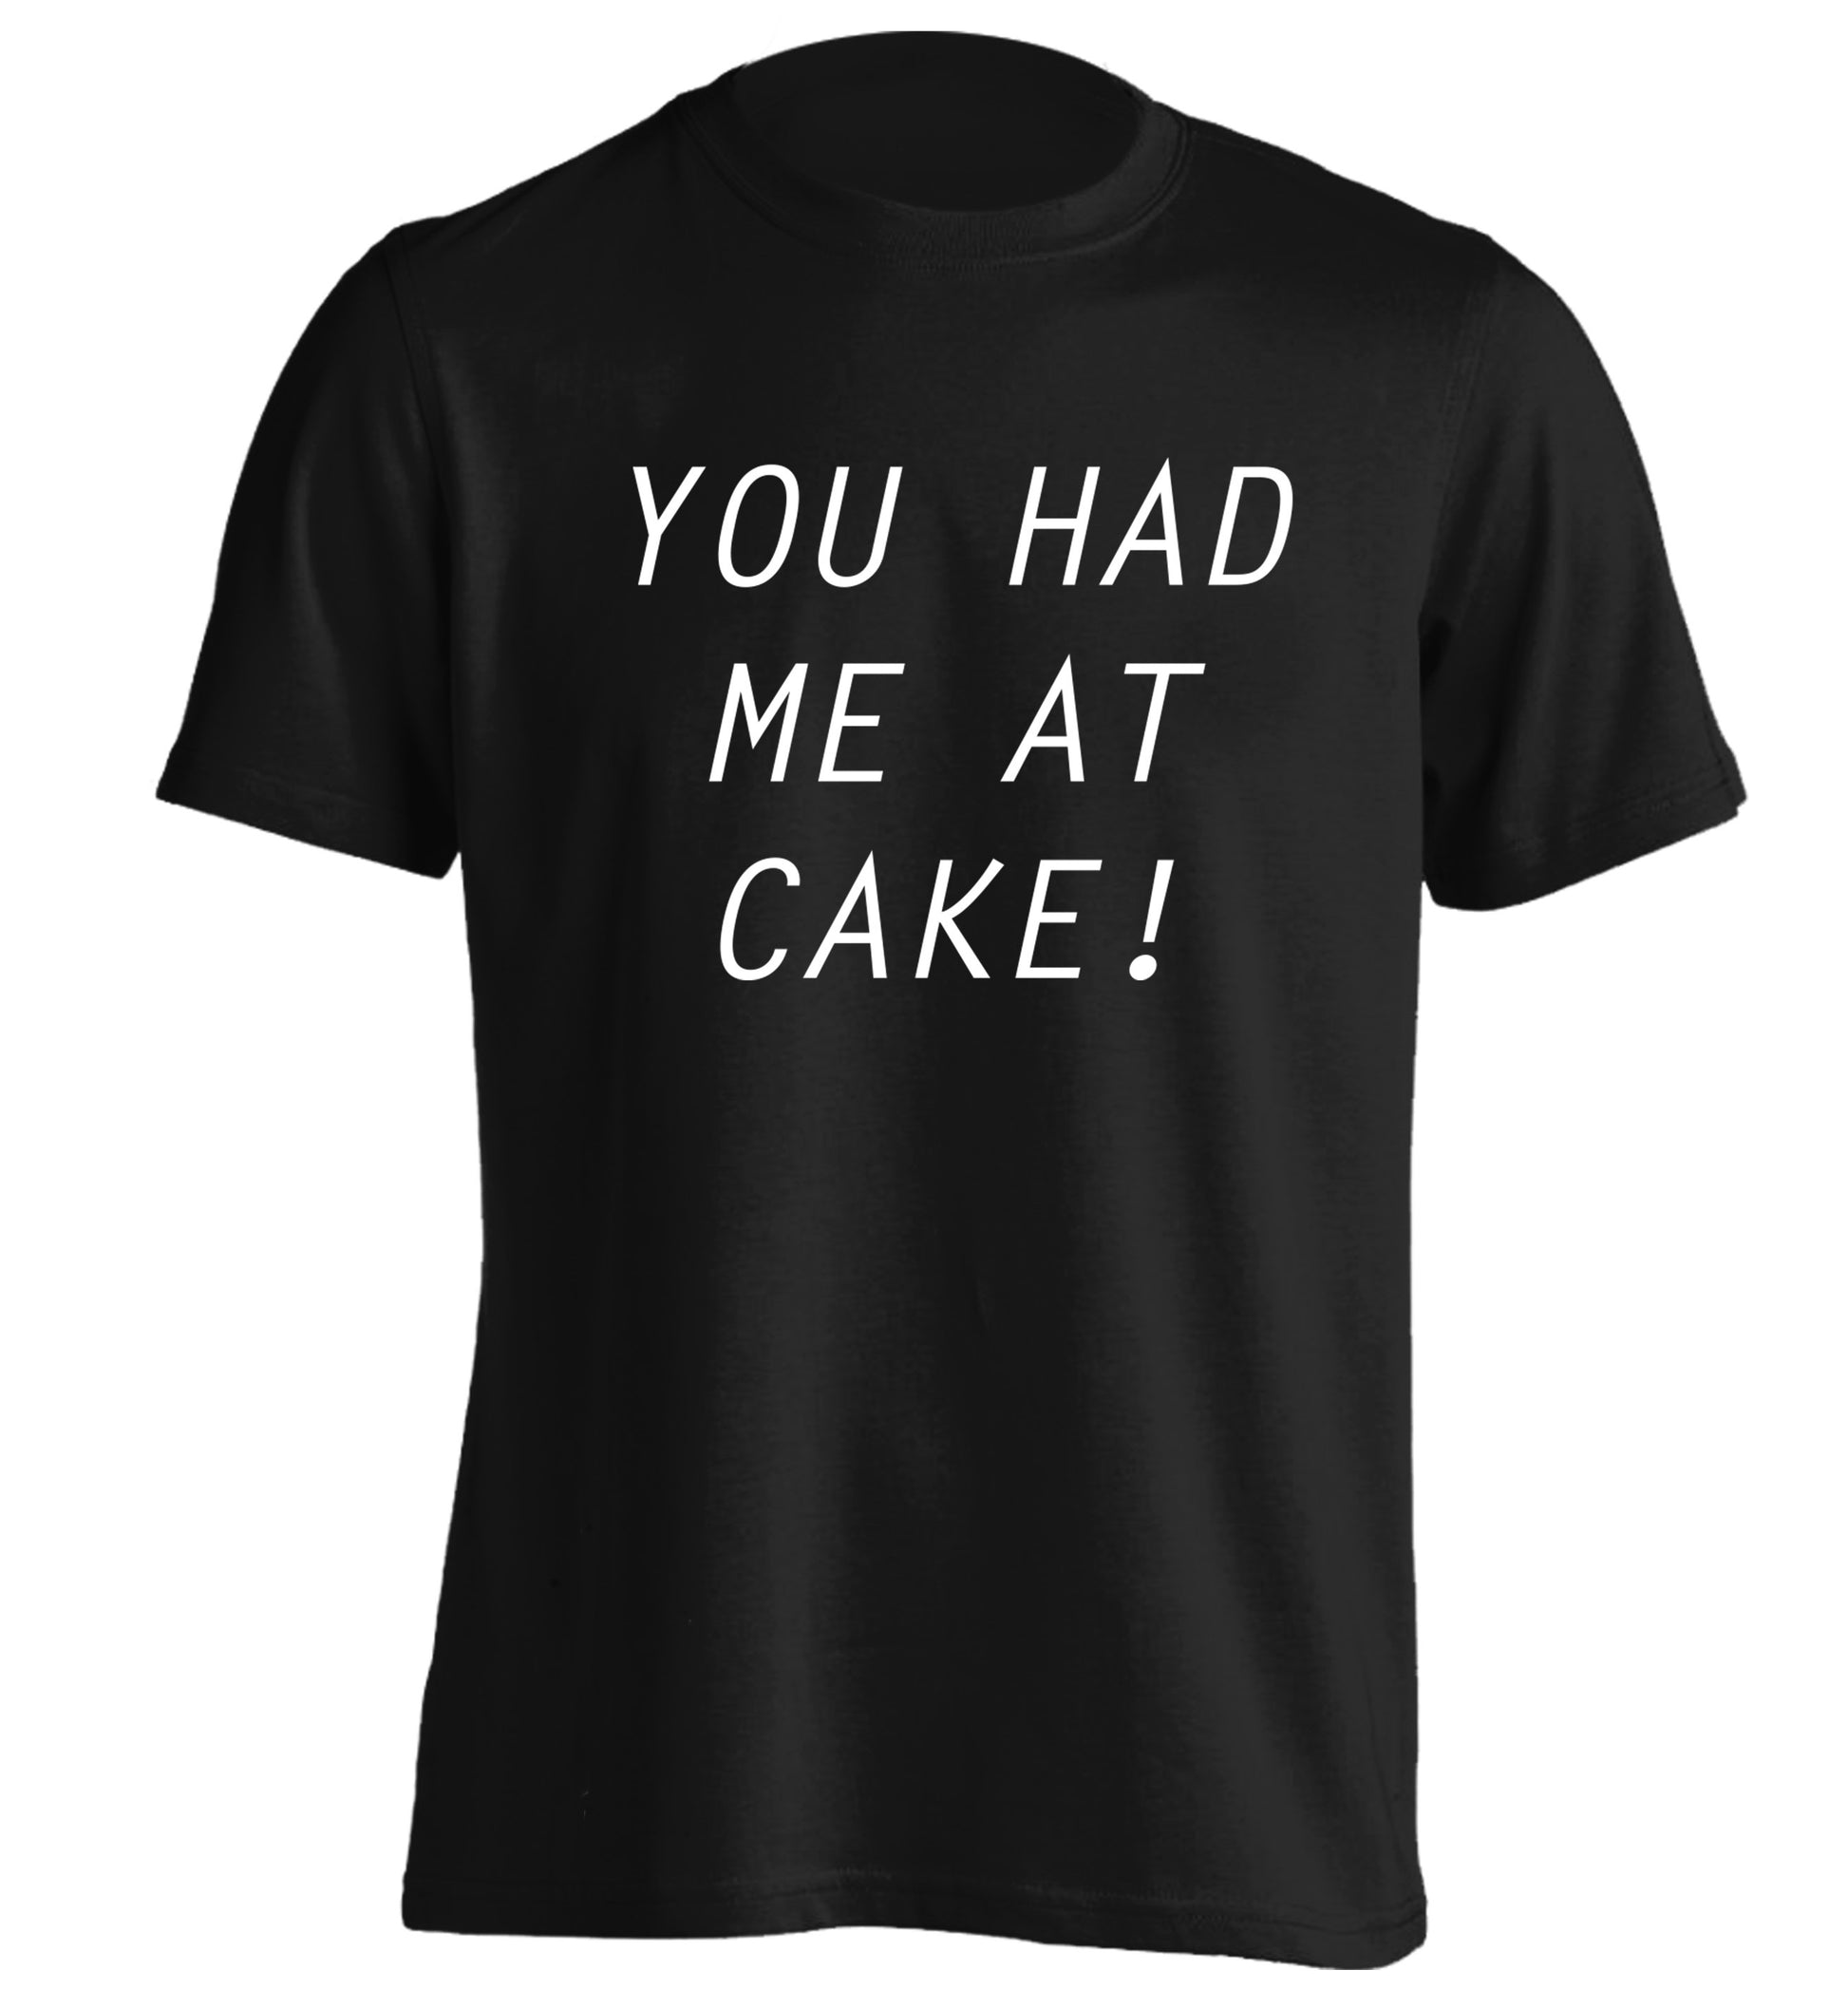 You had me at cake adults unisex black Tshirt 2XL